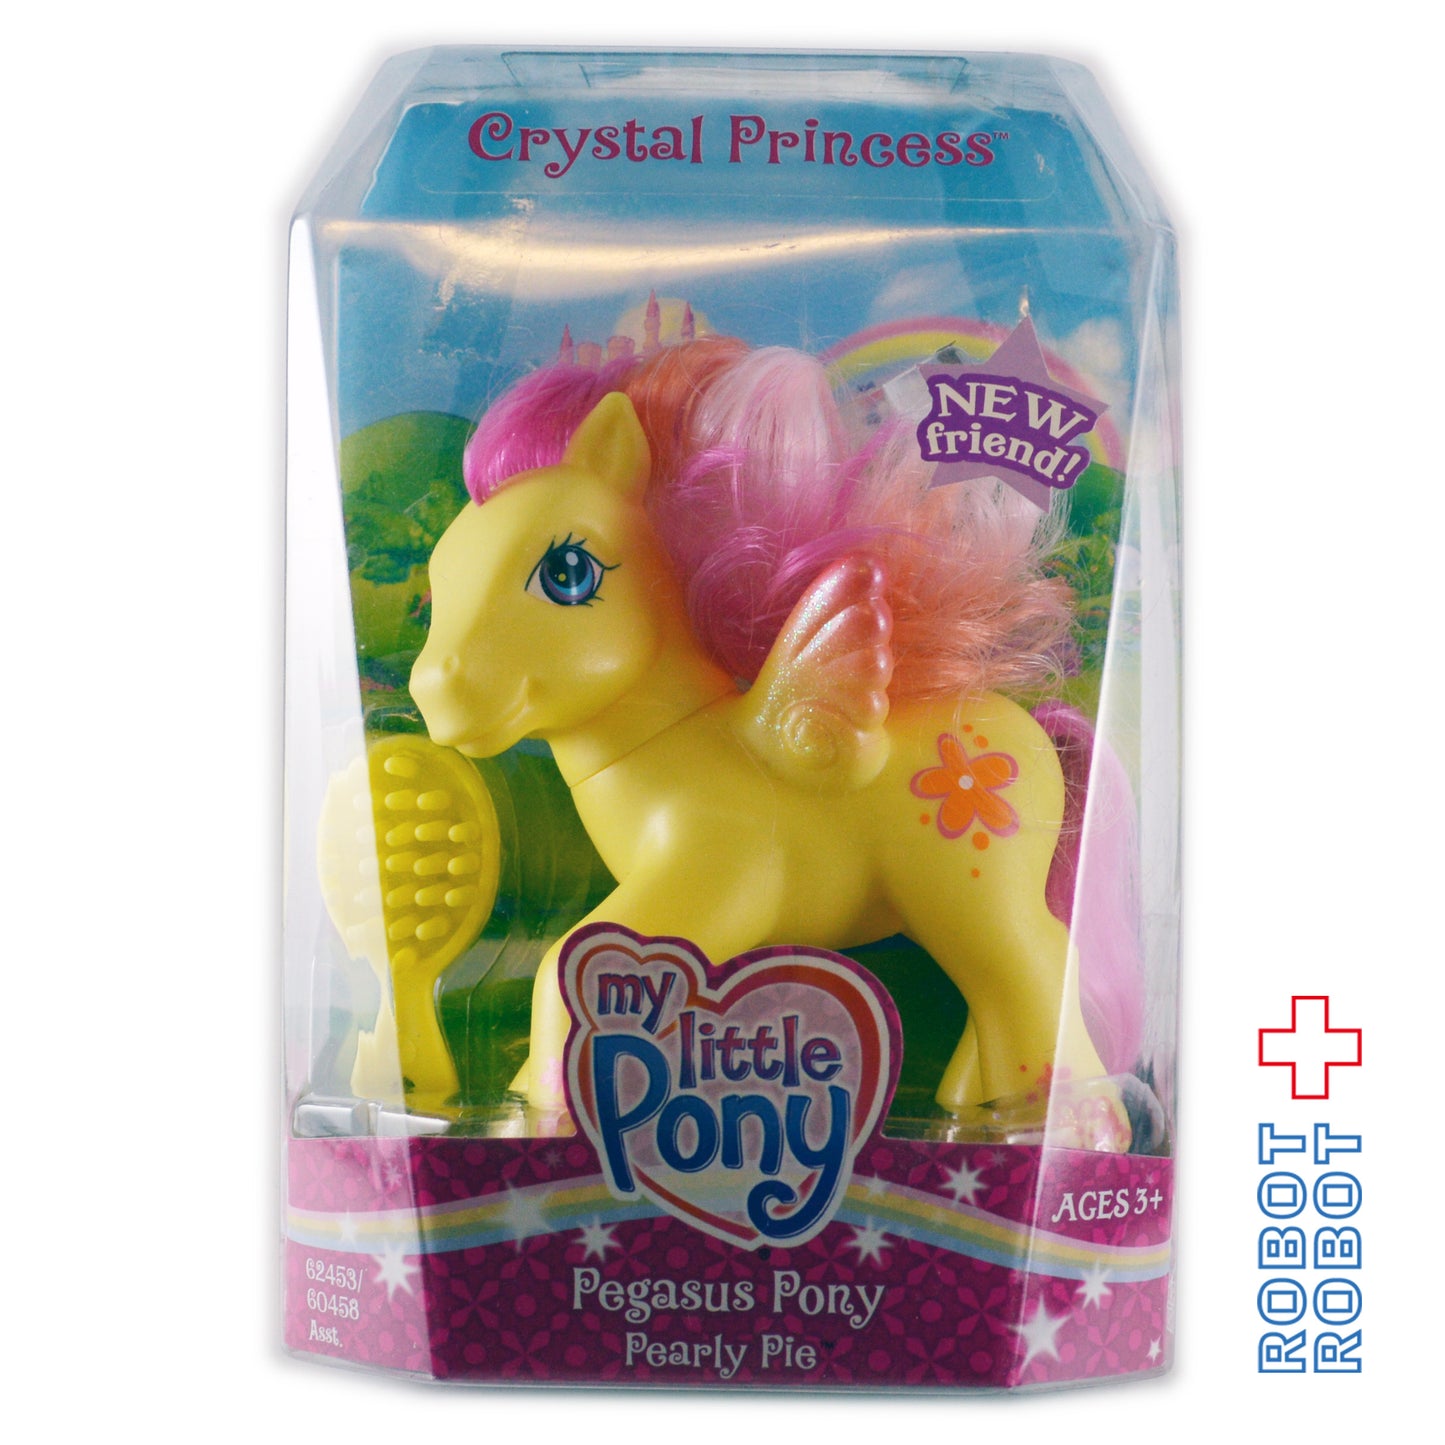 My Little Pony G3 Crystal Princess PEGASUS PONY PEARLY PIE